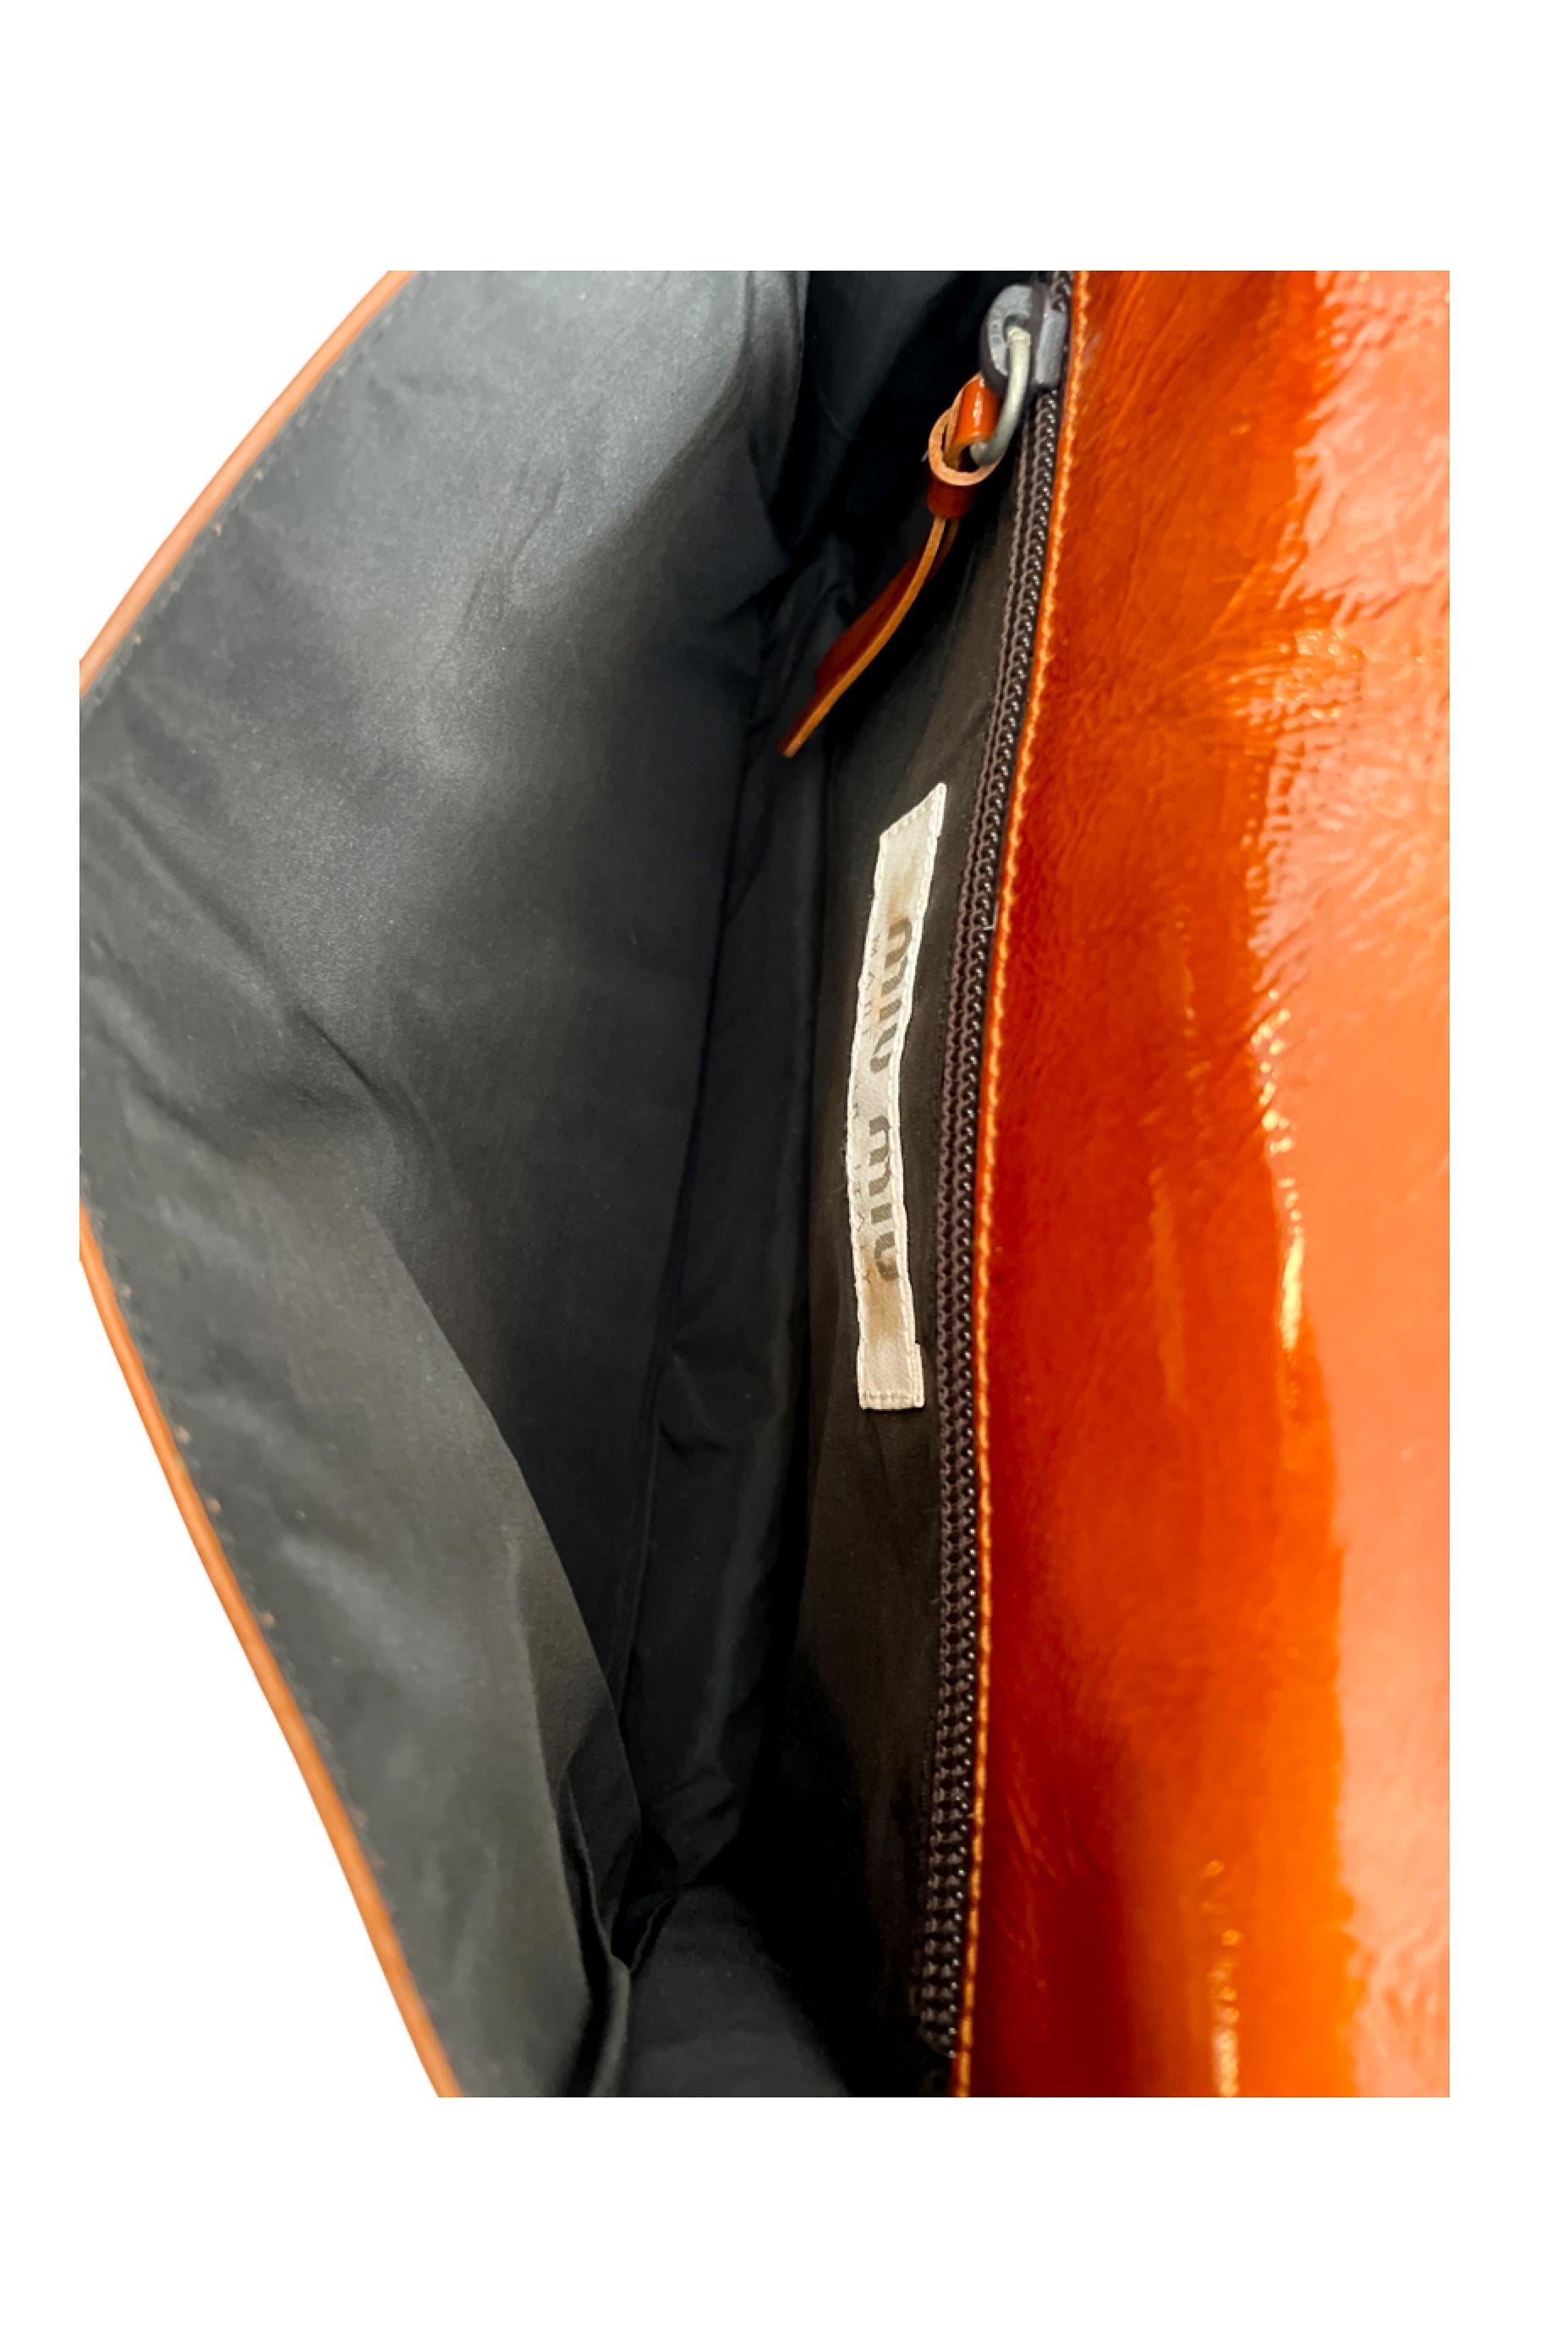 Miu Miu Orange Patent & Red Shearling Bag For Sale 1